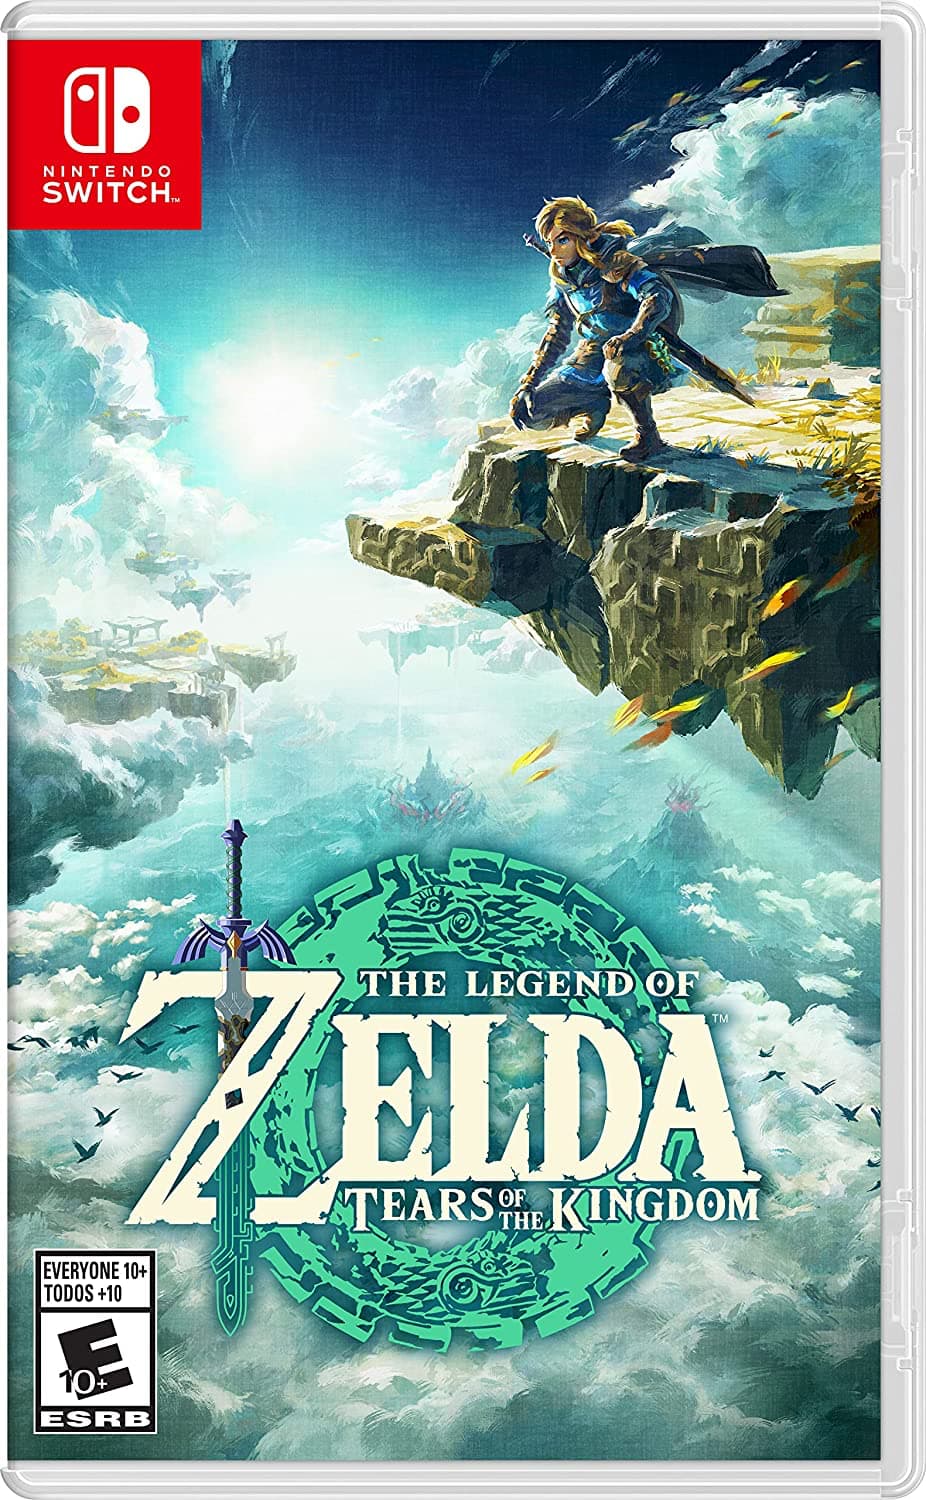 The Legend of Zelda: Tears of the Kingdom Nintendo Switch artwork.